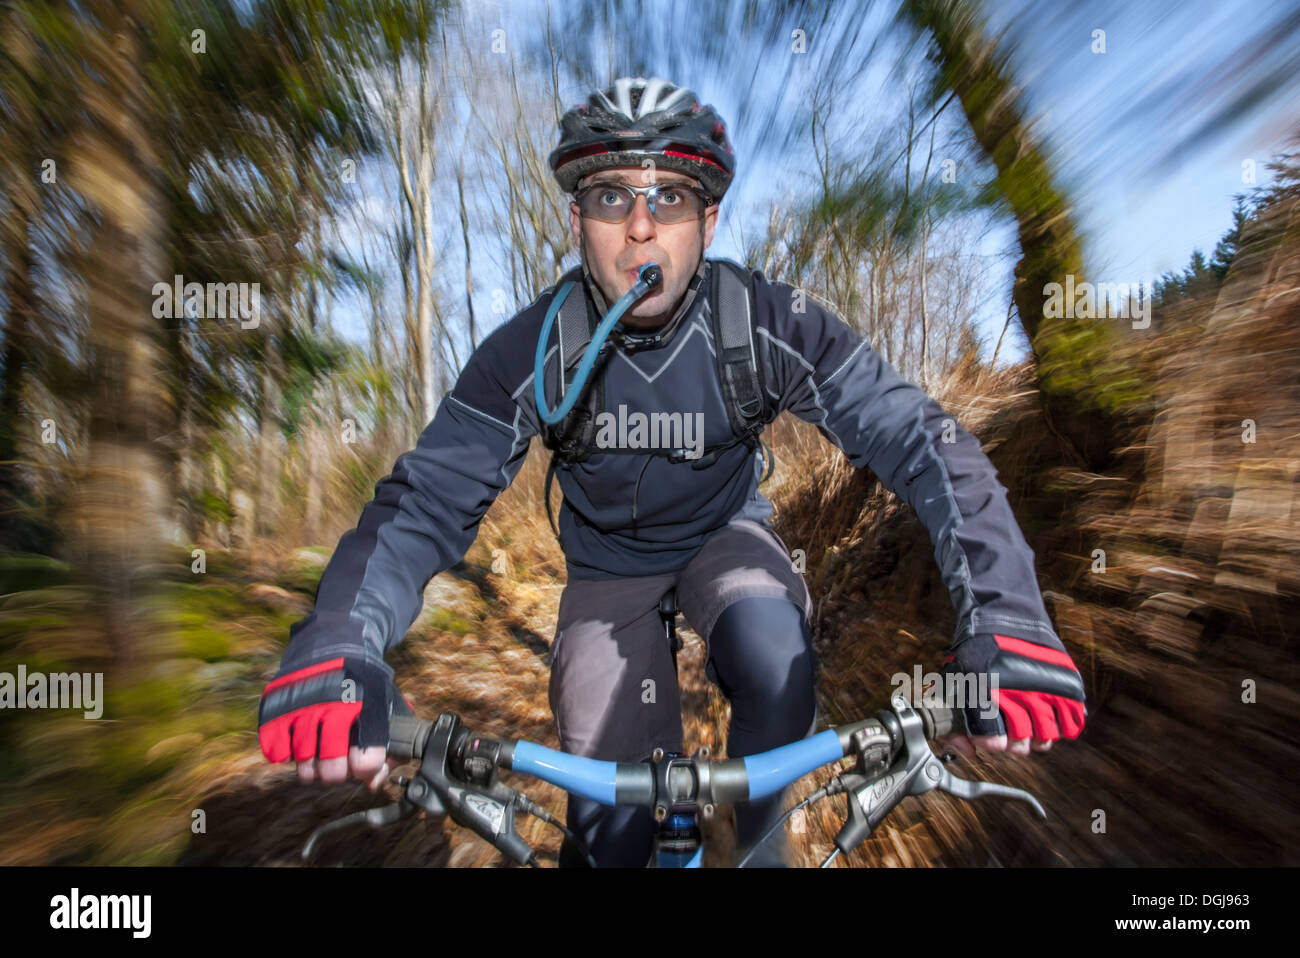 Male mountain biker. Stock Photo